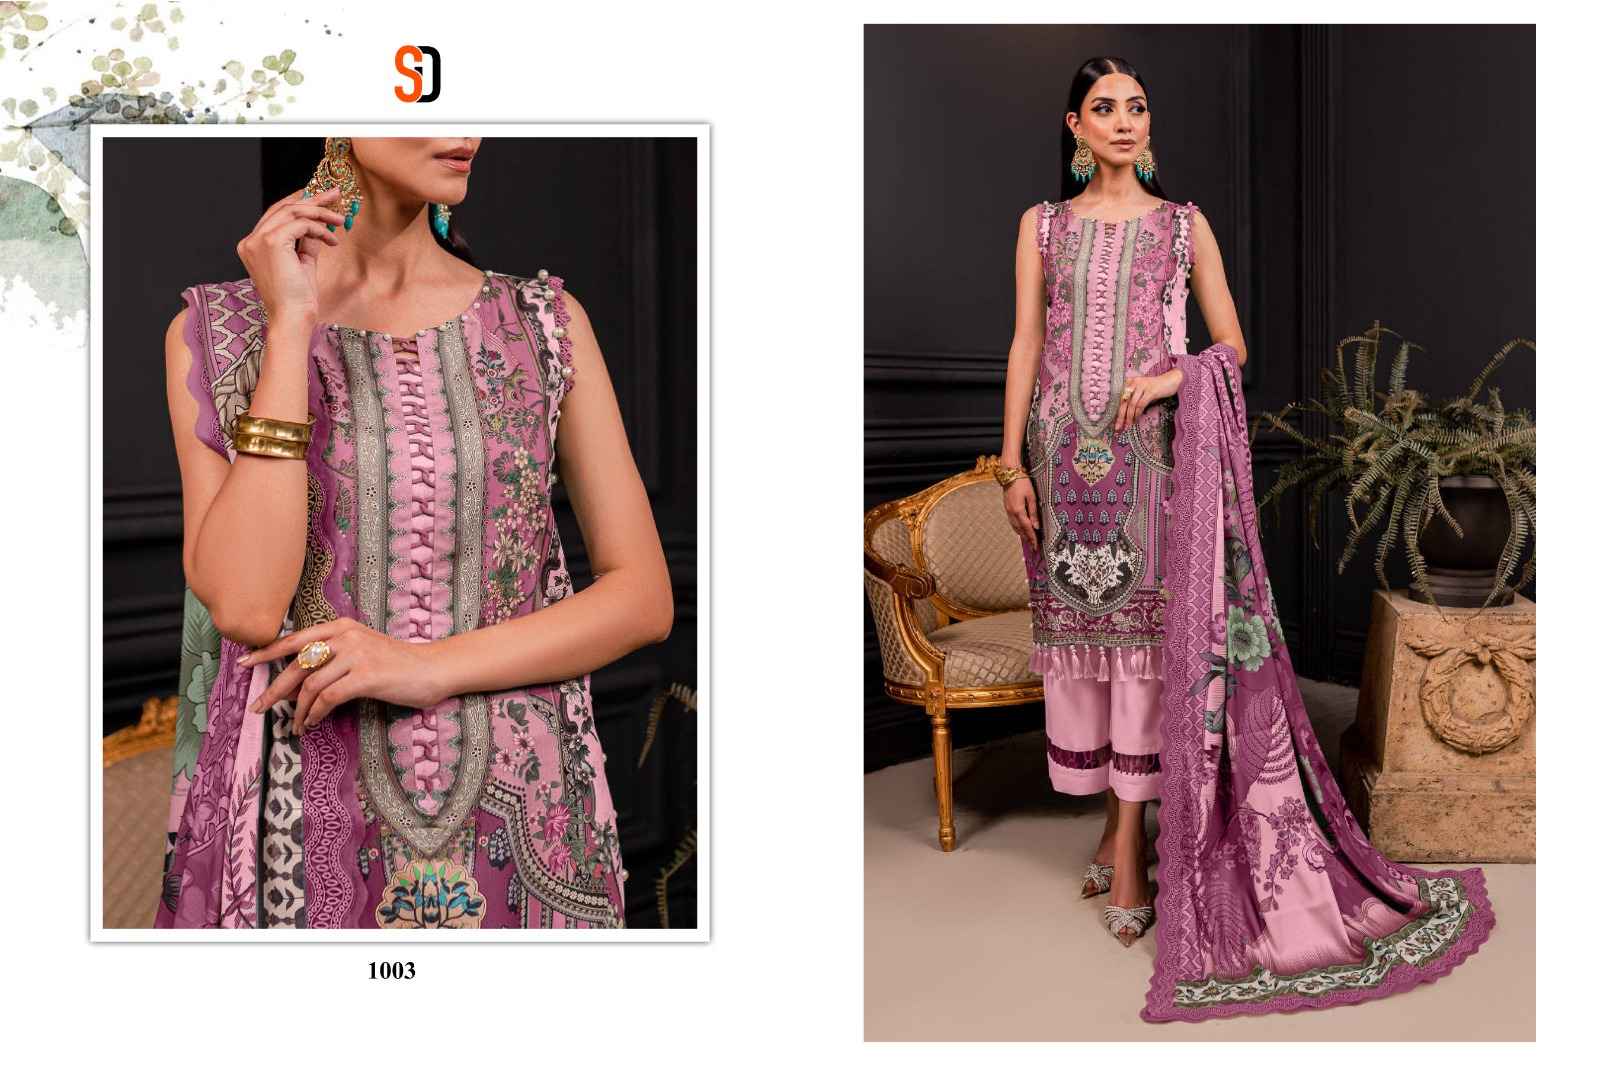 Shraddha Needle Wonder Vol-1 Lawn Cotton Dress Material (4 pc Cataloge)